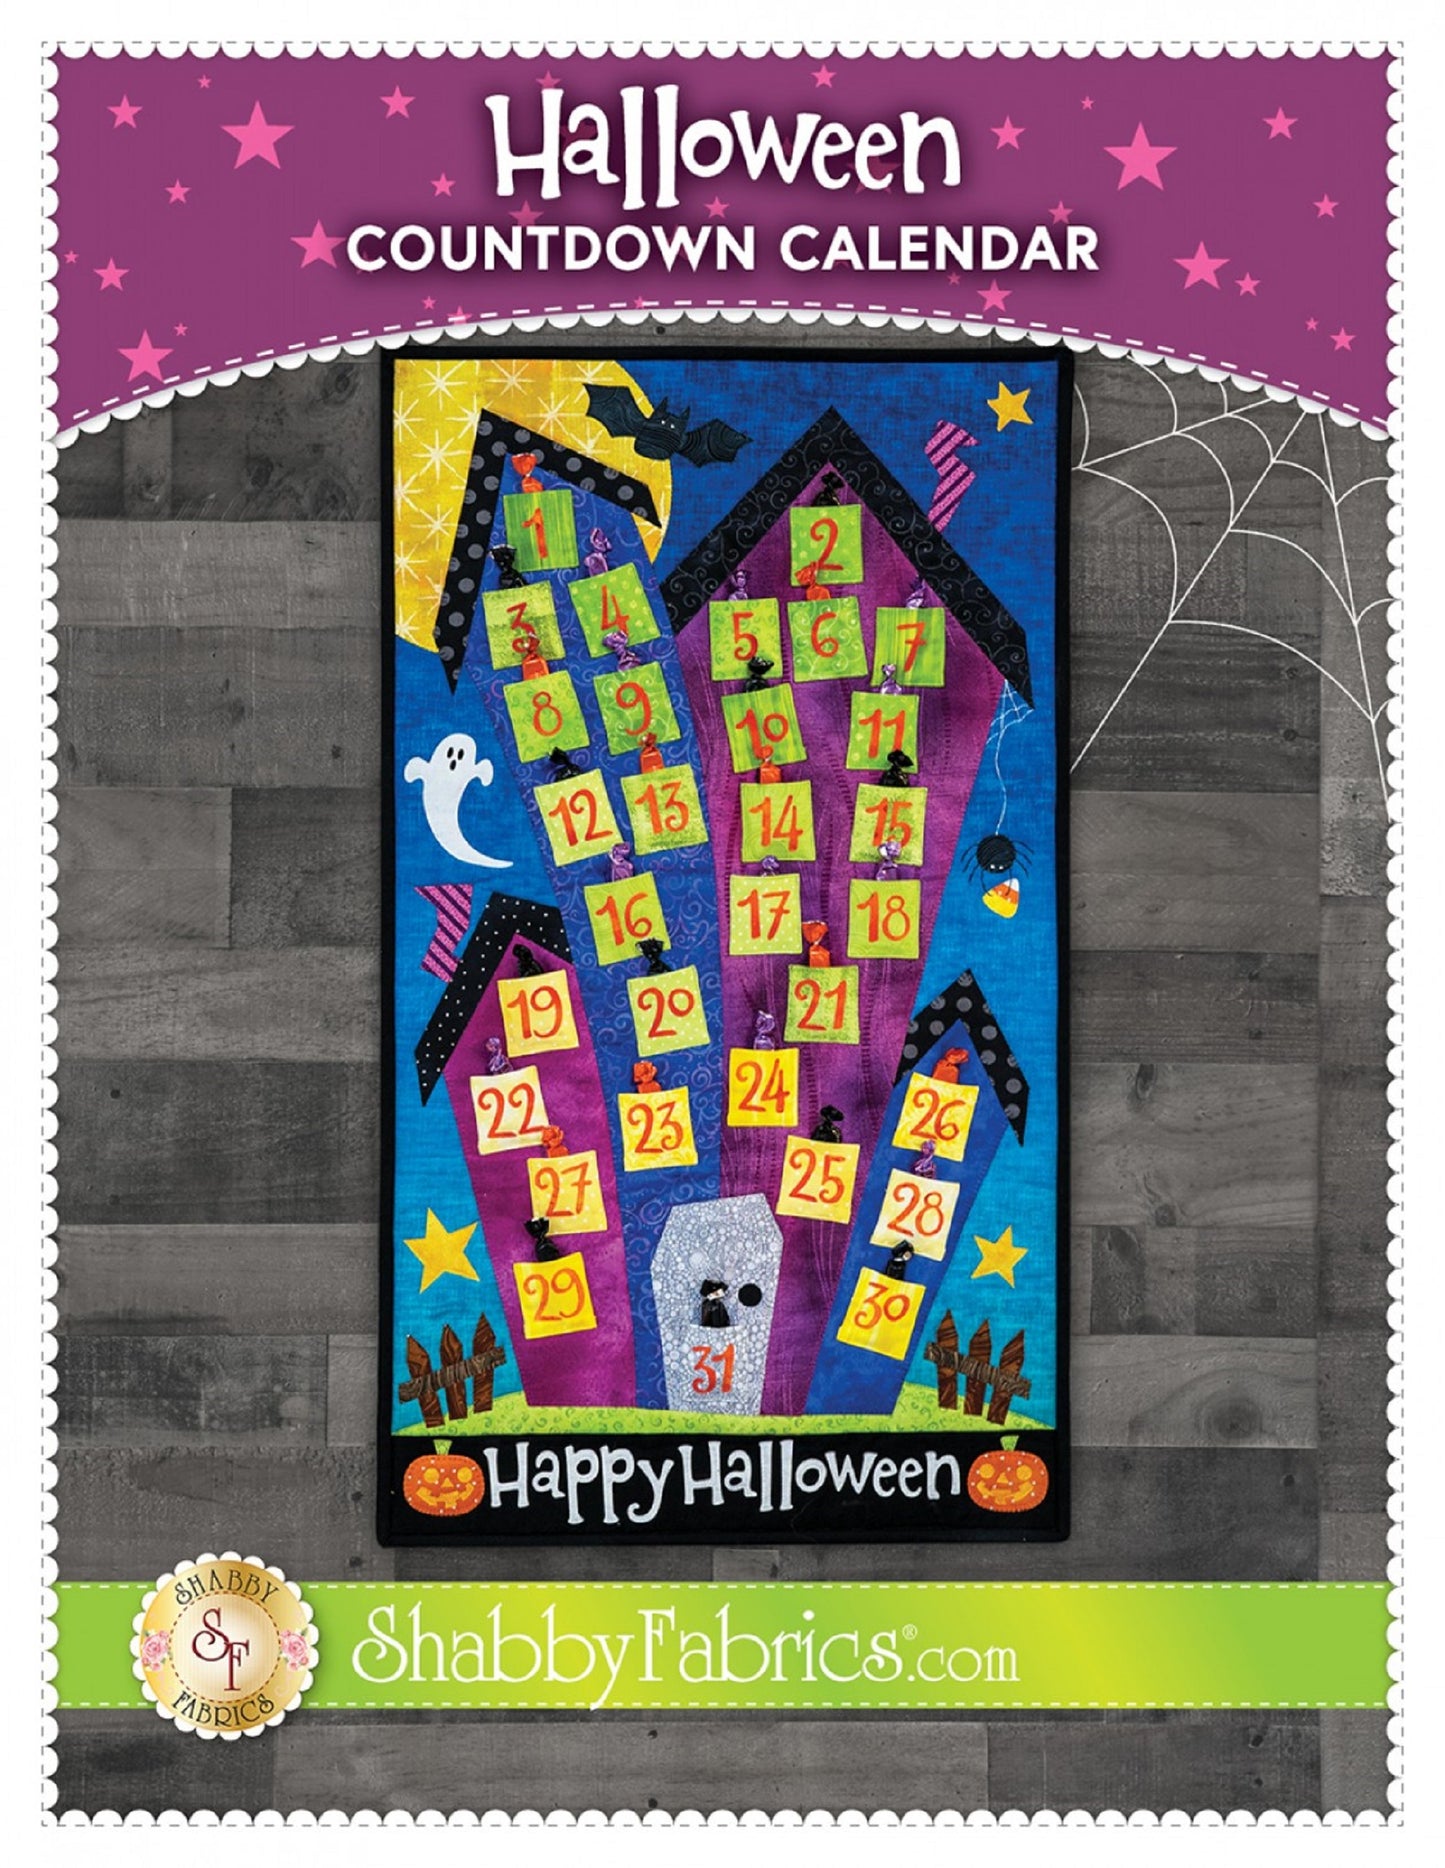 Halloween Countdown Calendar Pattern by Shabby Fabrics